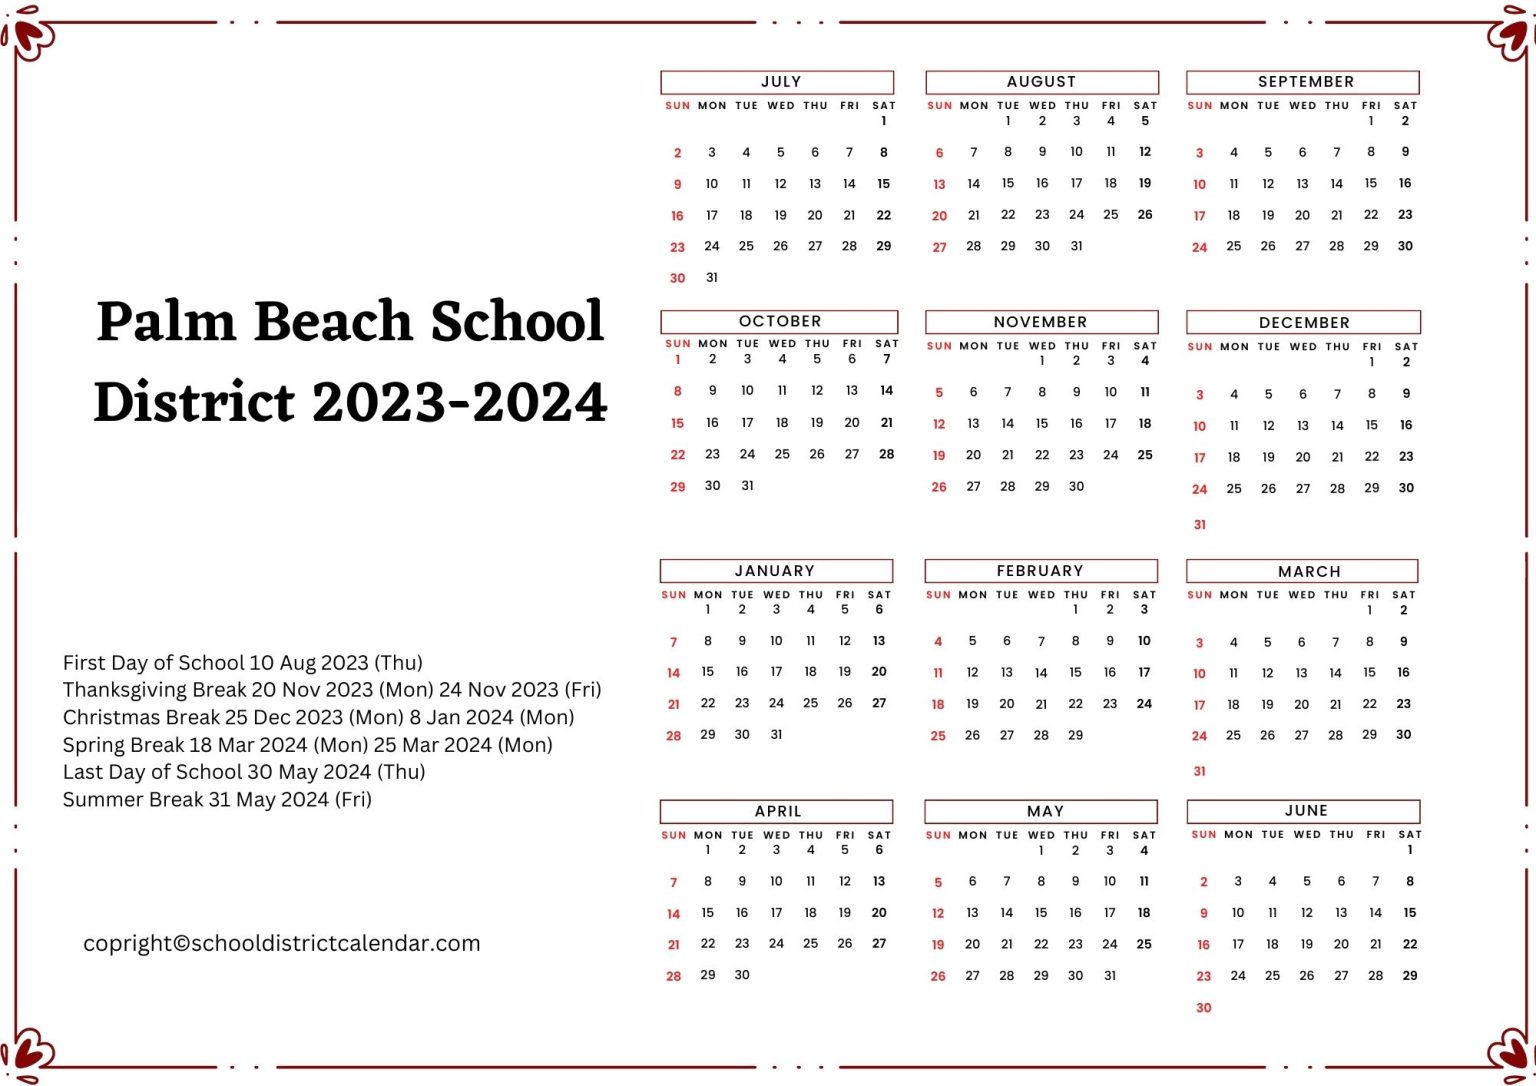 Palm Beach School District Calendar Holidays 20232024